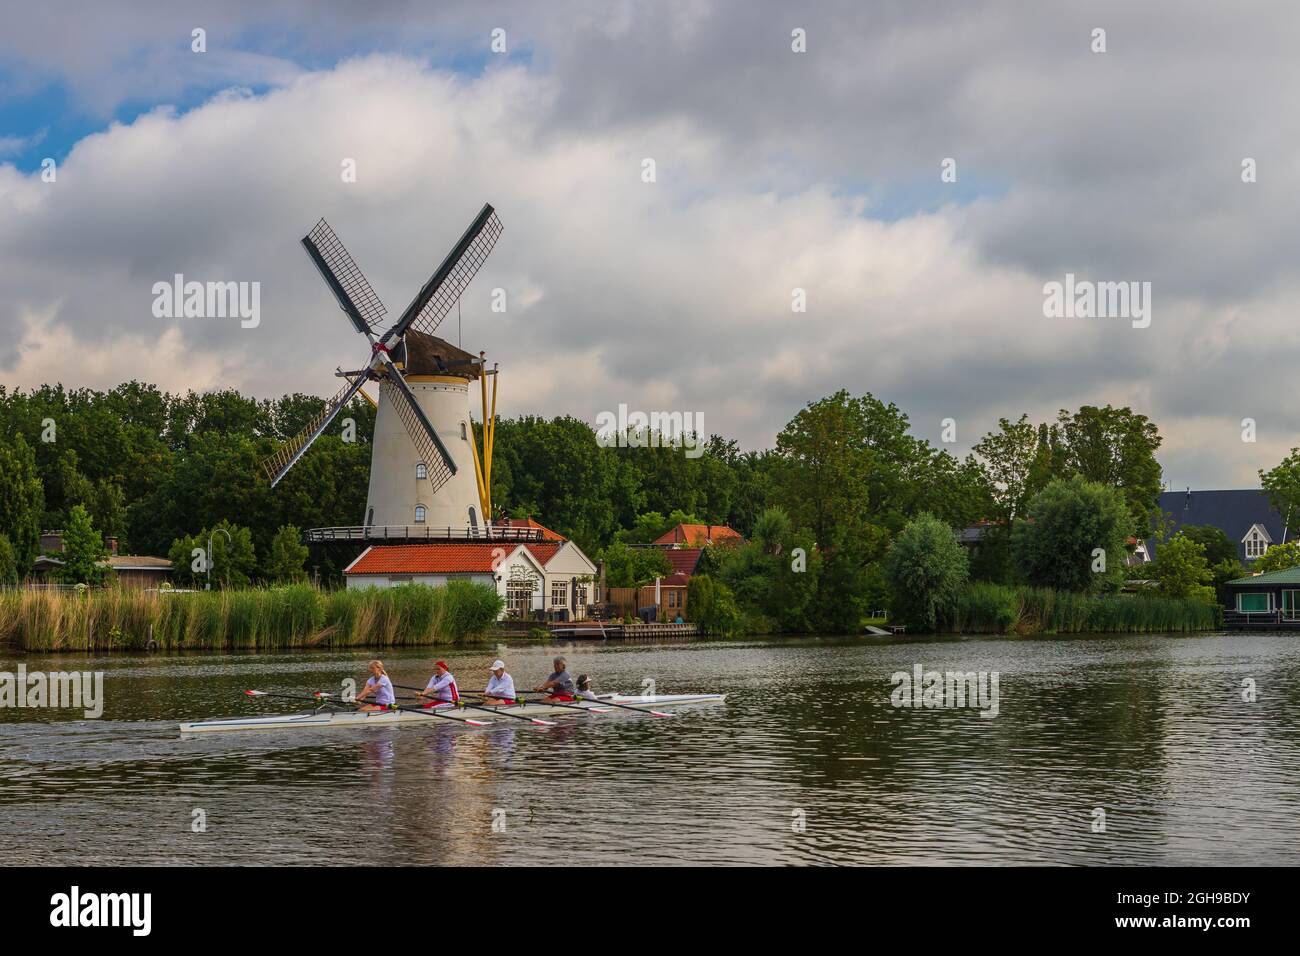 Windmill de 4 winden, Rotterdam, pays-Bas Banque D'Images